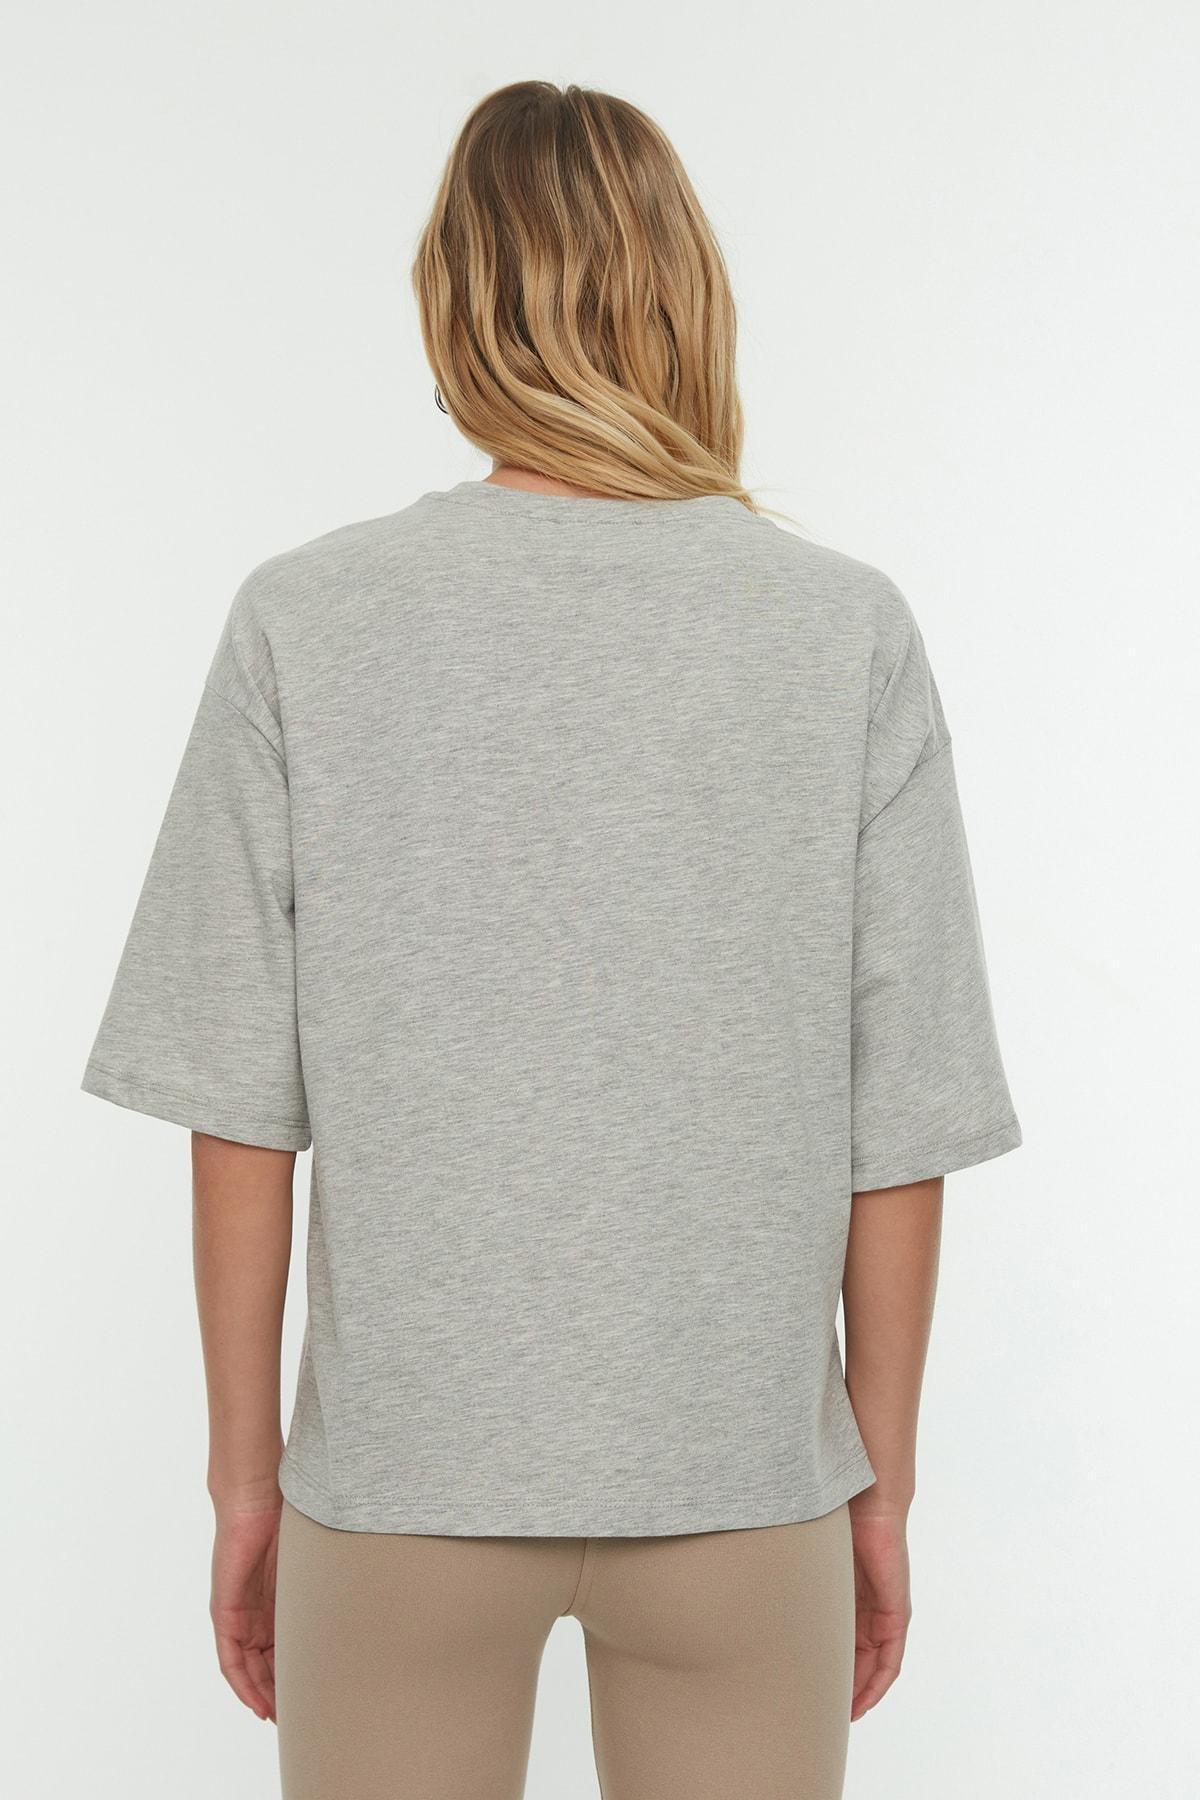 Trendyol - Gray Printed T-Shirt